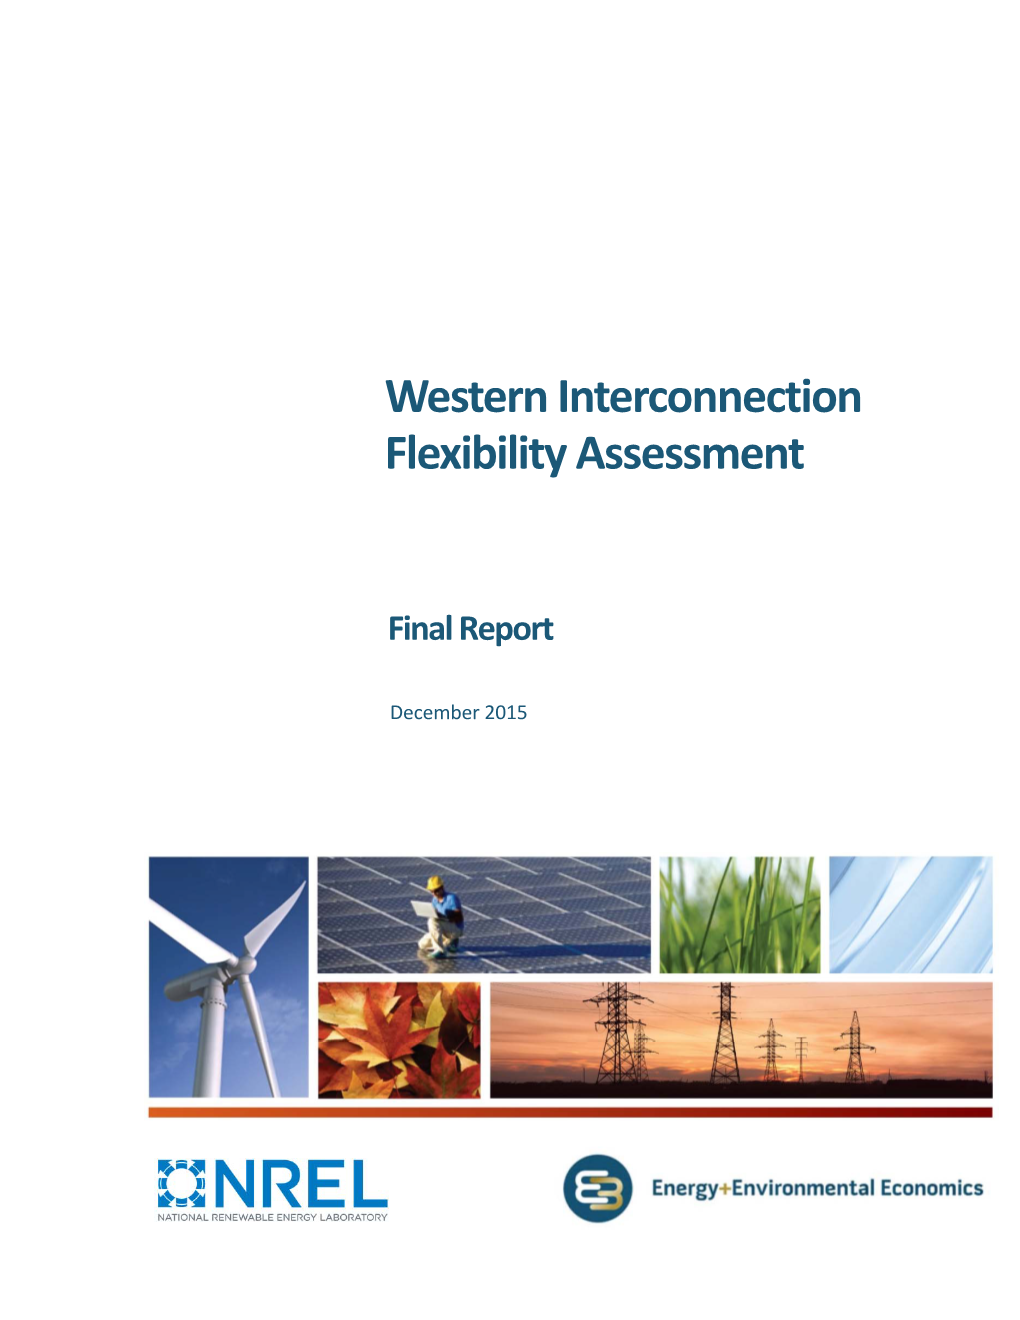 Western Interconnection Flexibility Assessment